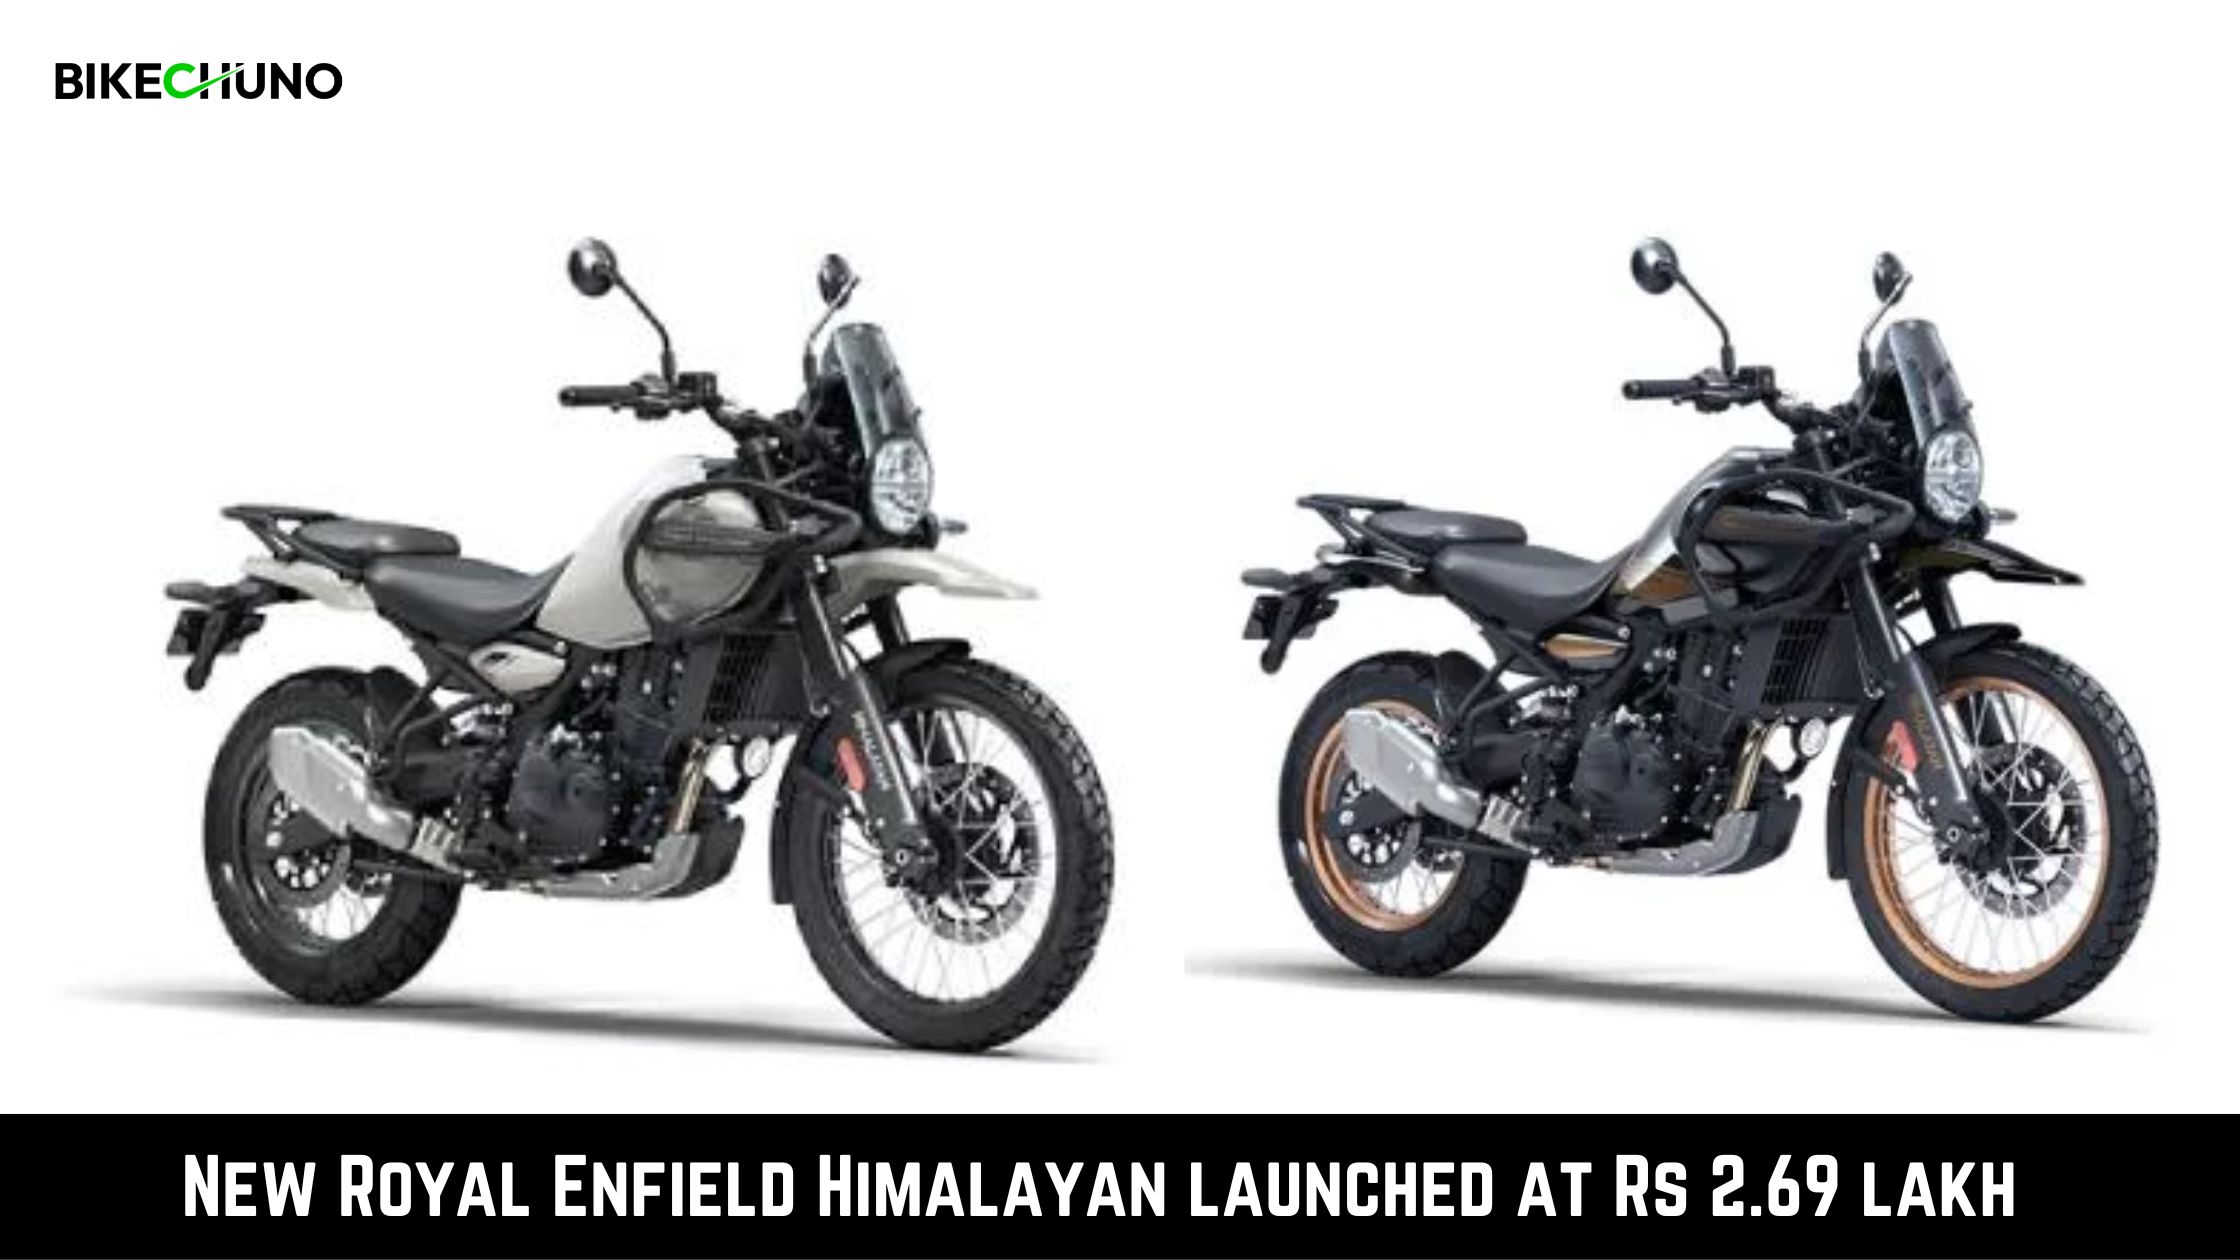 New Royal Enfield Himalayan launched at Rs 2.69 lakh